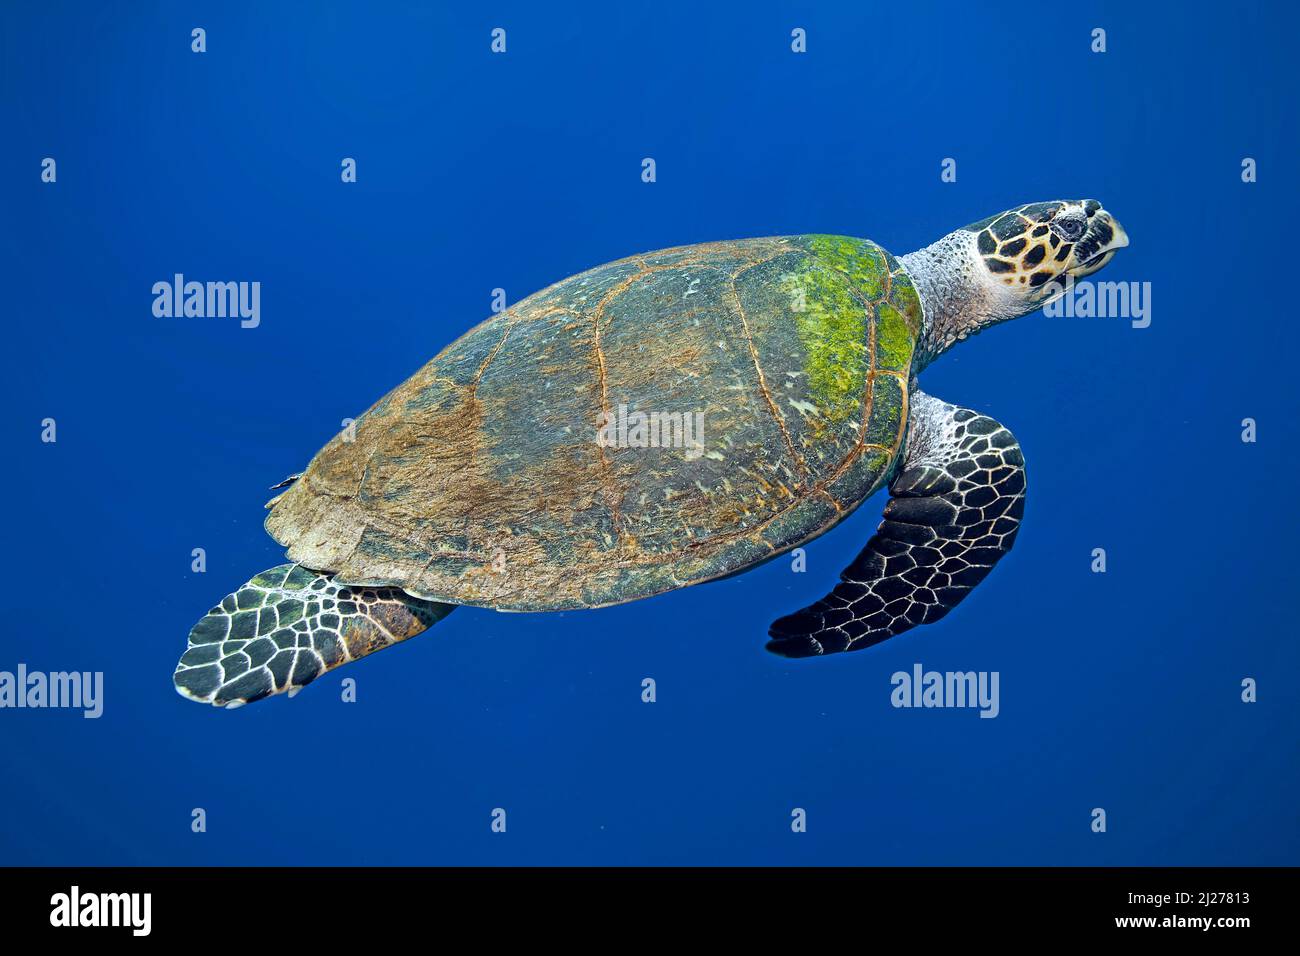 Hawksbill turtle (Eretmochelys imbricata) swimming in blue water, Marsa Alam, Egypt Stock Photo